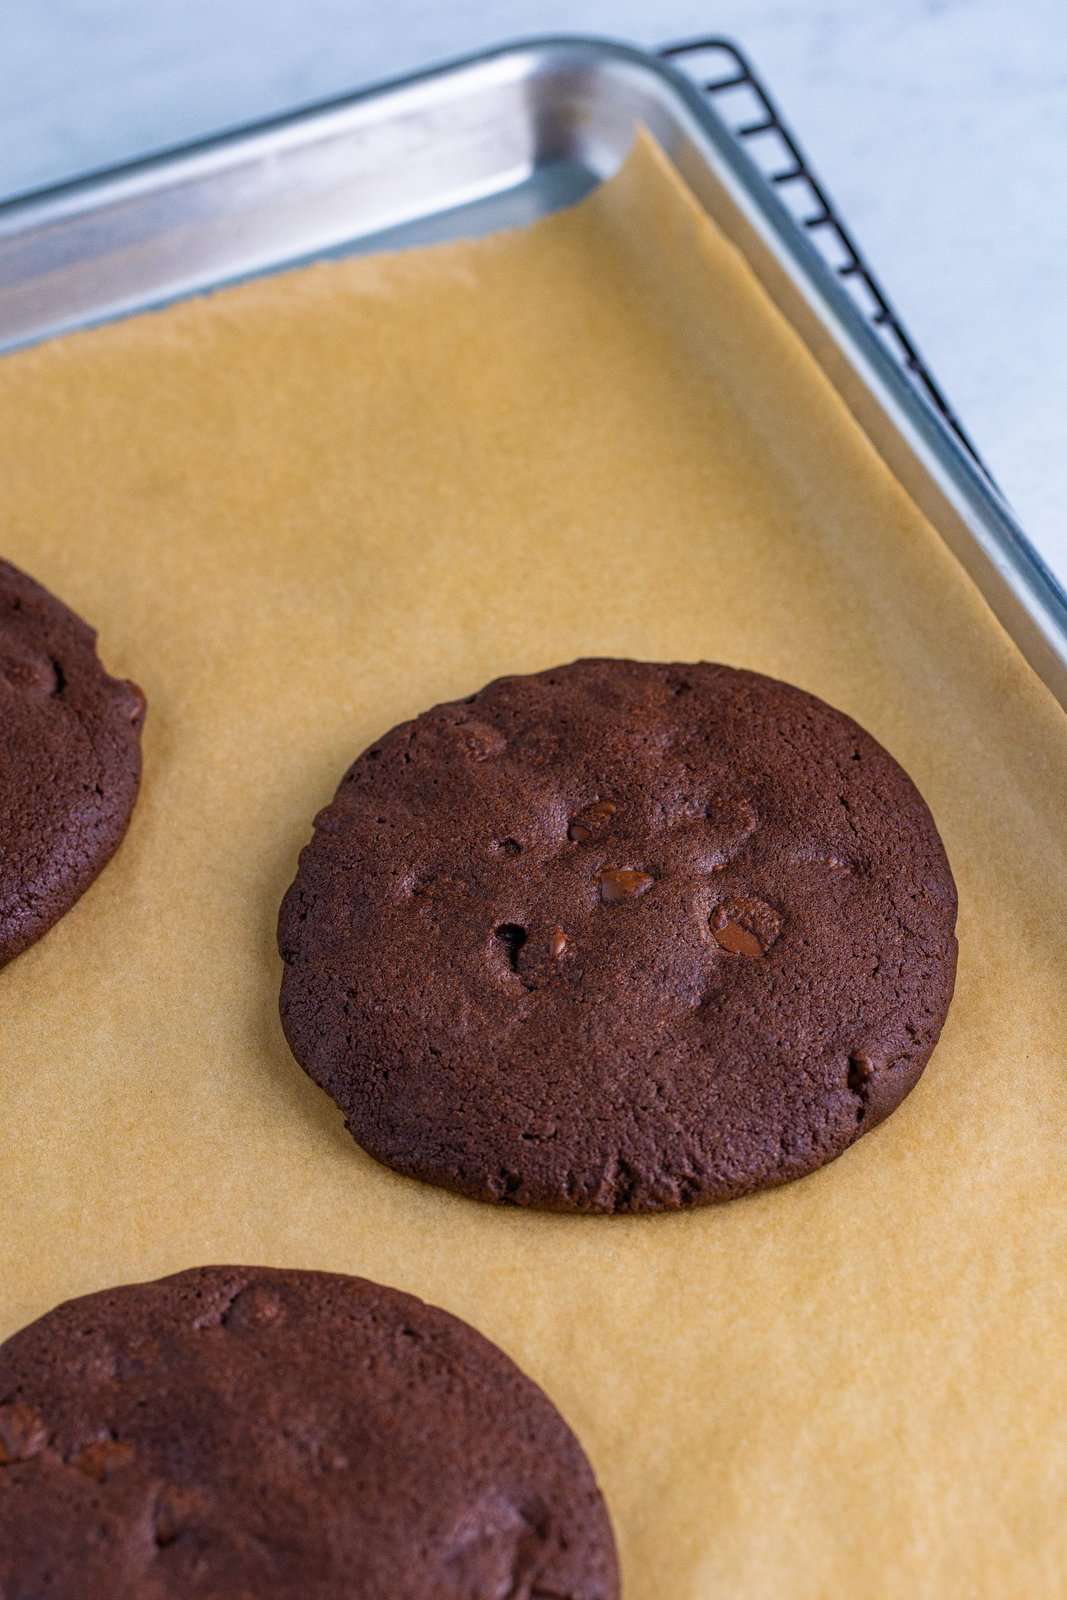 Baked chocolate cake cookies.